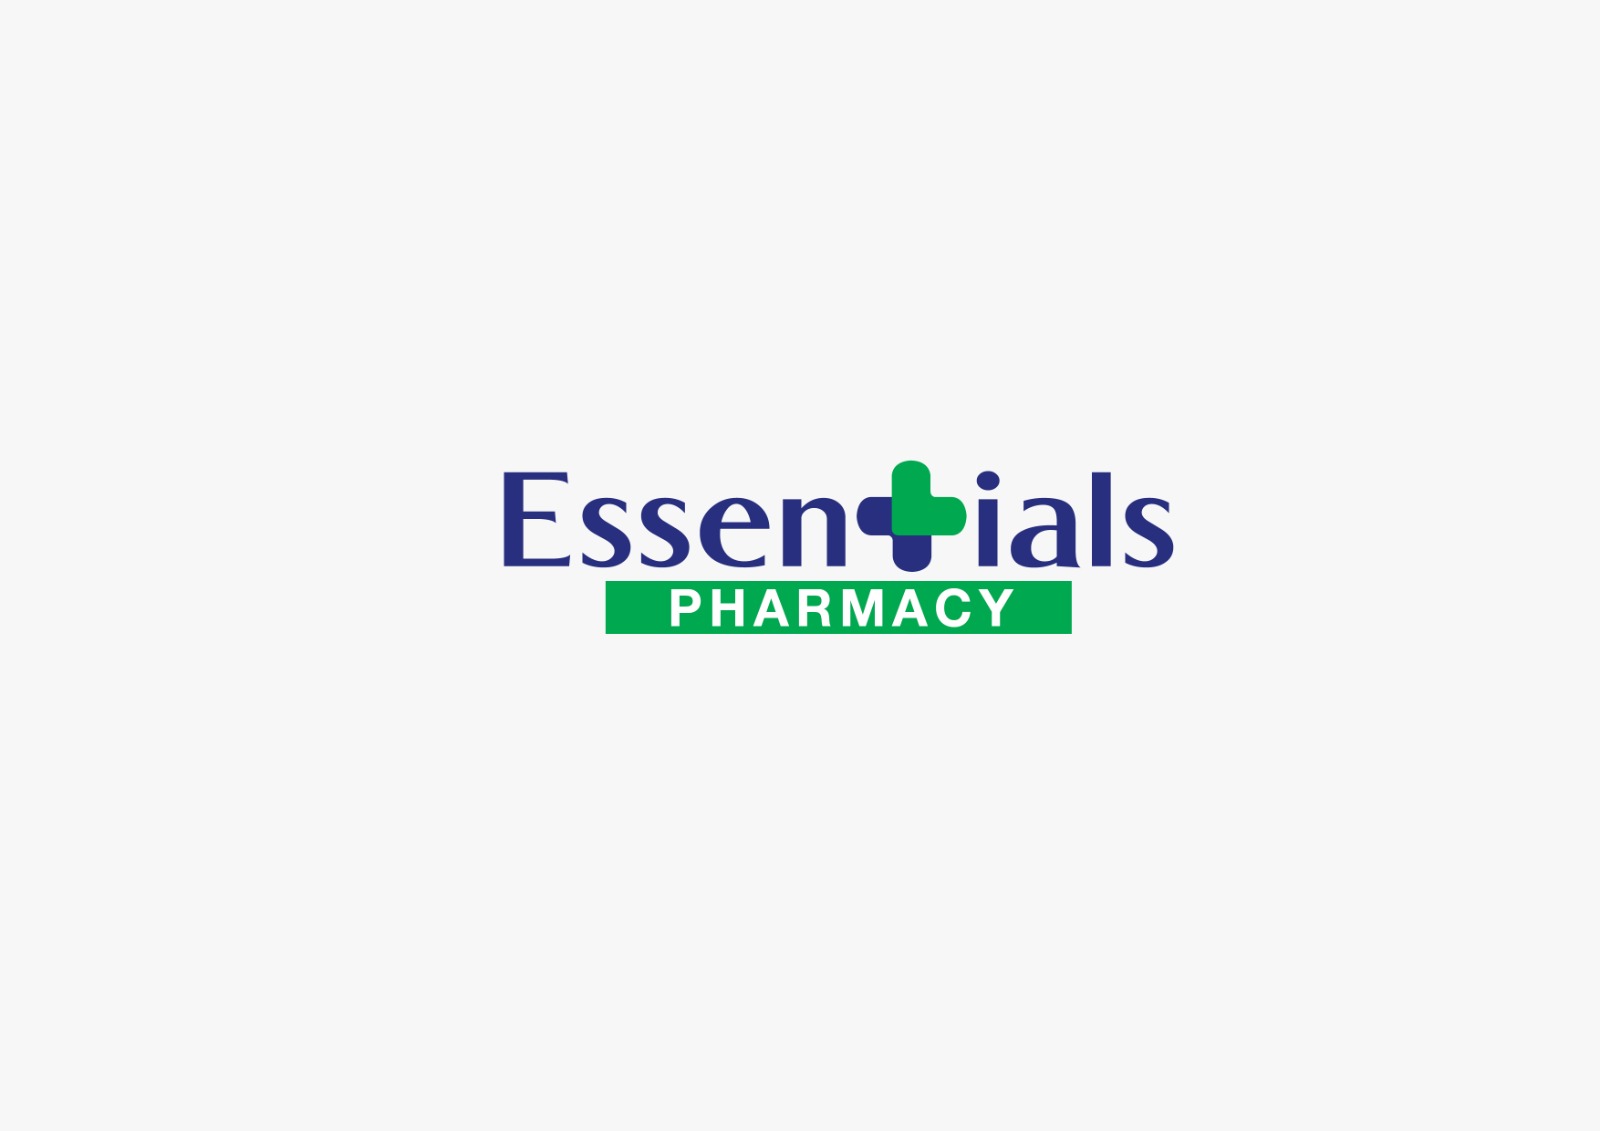 Essentials Pharmacy company logo